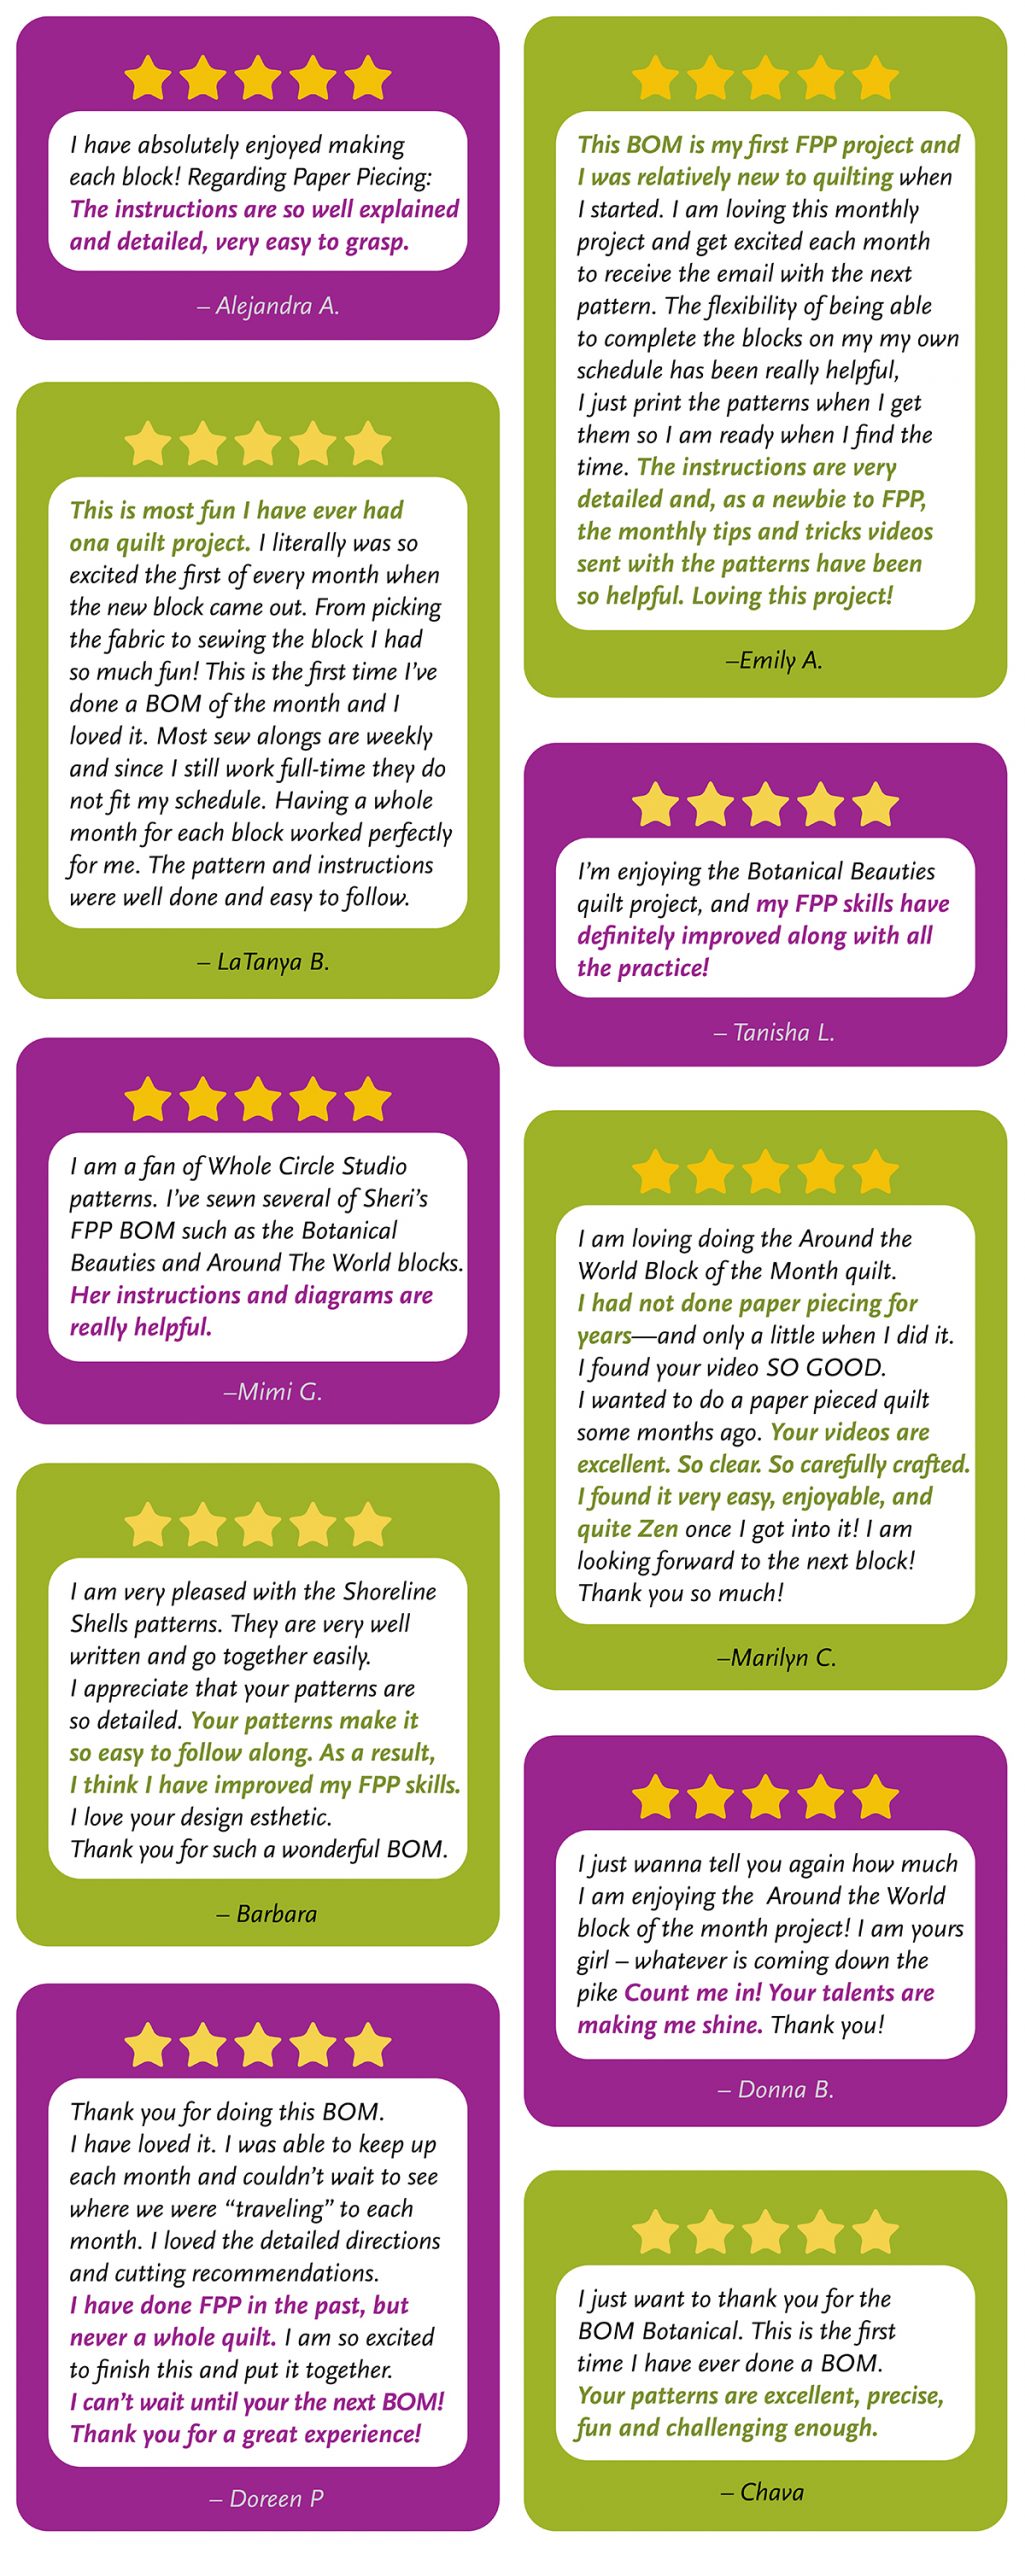 a screenshot of a reviews and testimonials